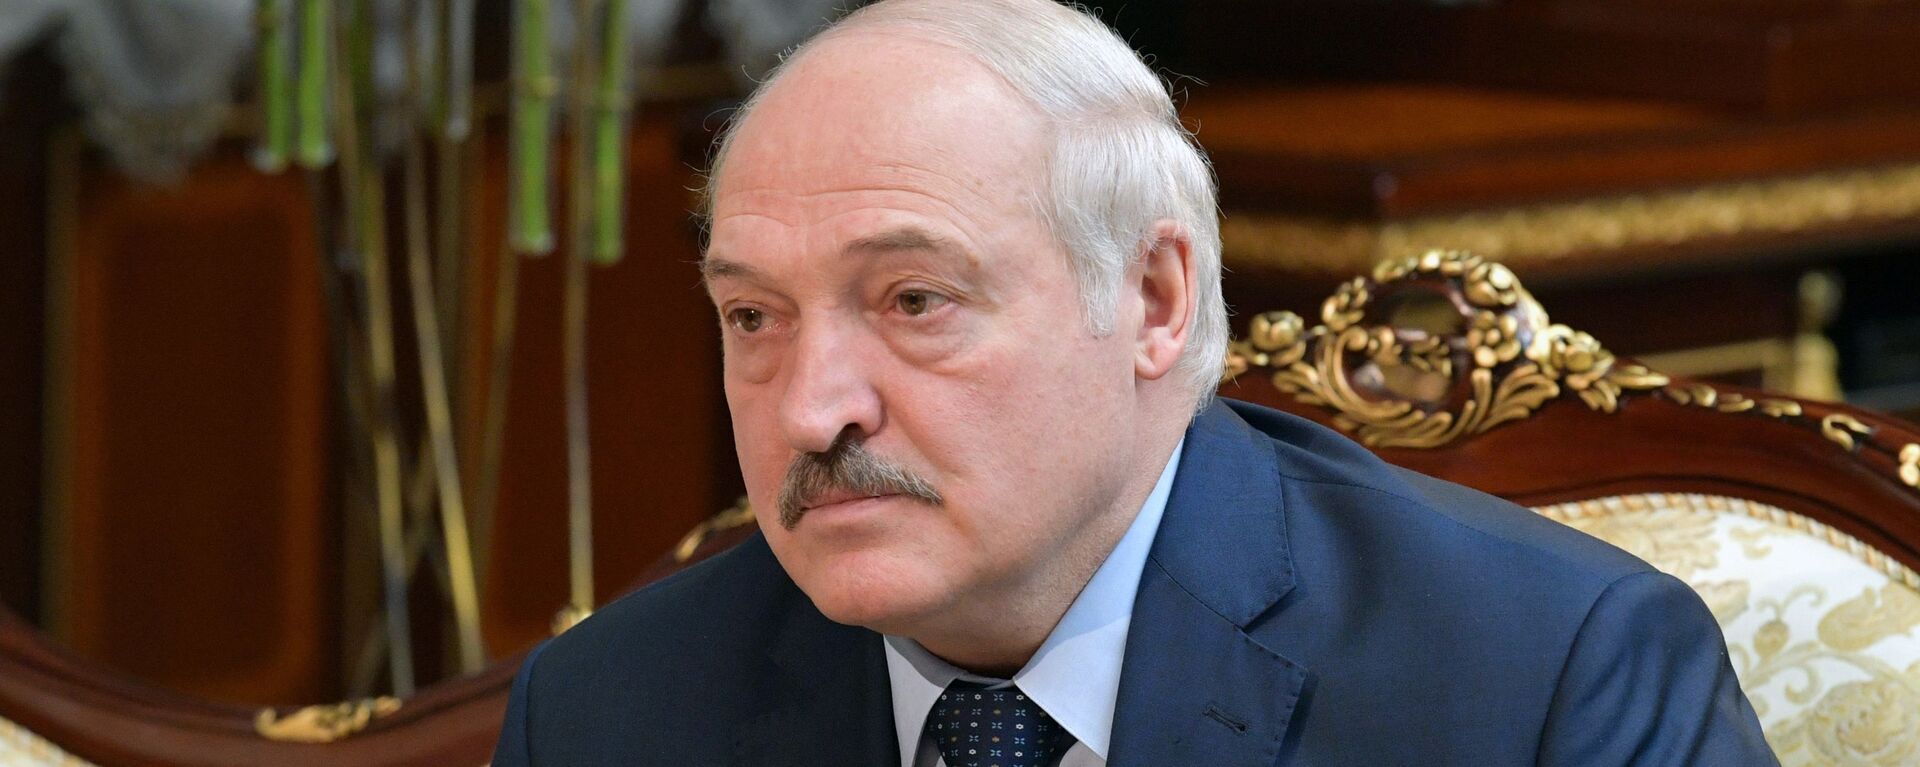 Tổng thống Belarus Alexander Lukashenko. - Sputnik Việt Nam, 1920, 26.11.2021